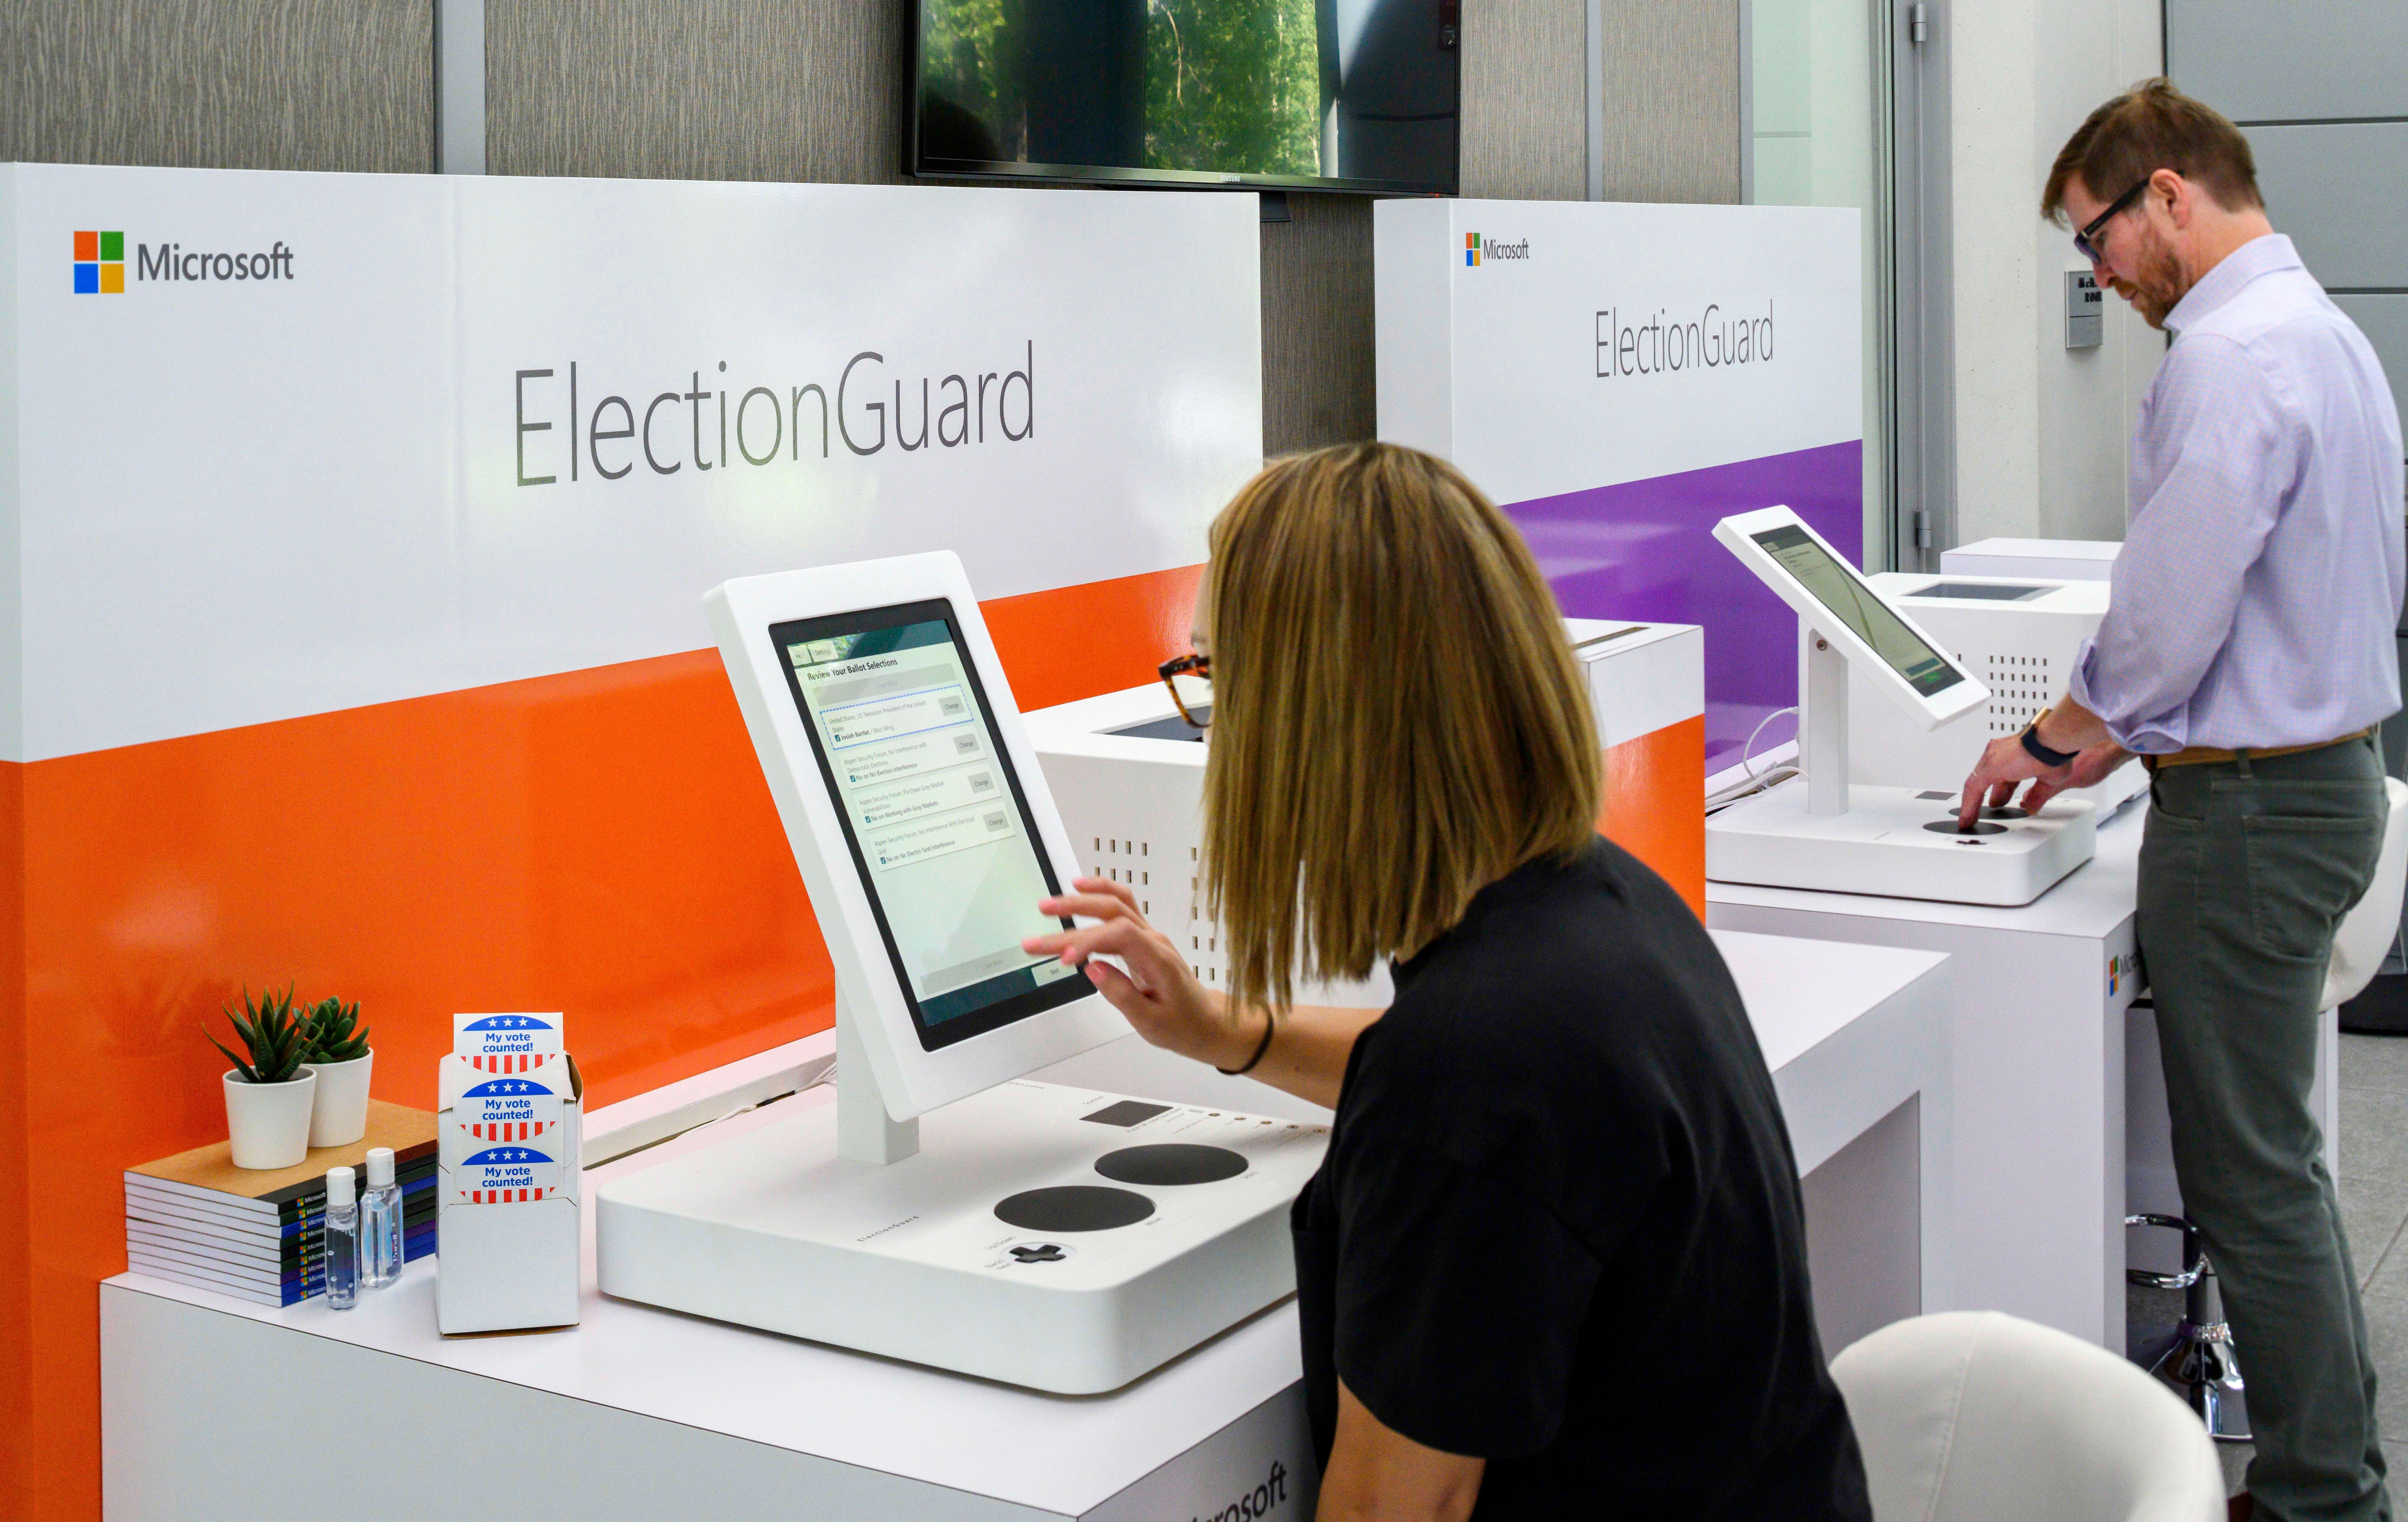 Man and woman look at Microsoft ElectionGuard demos